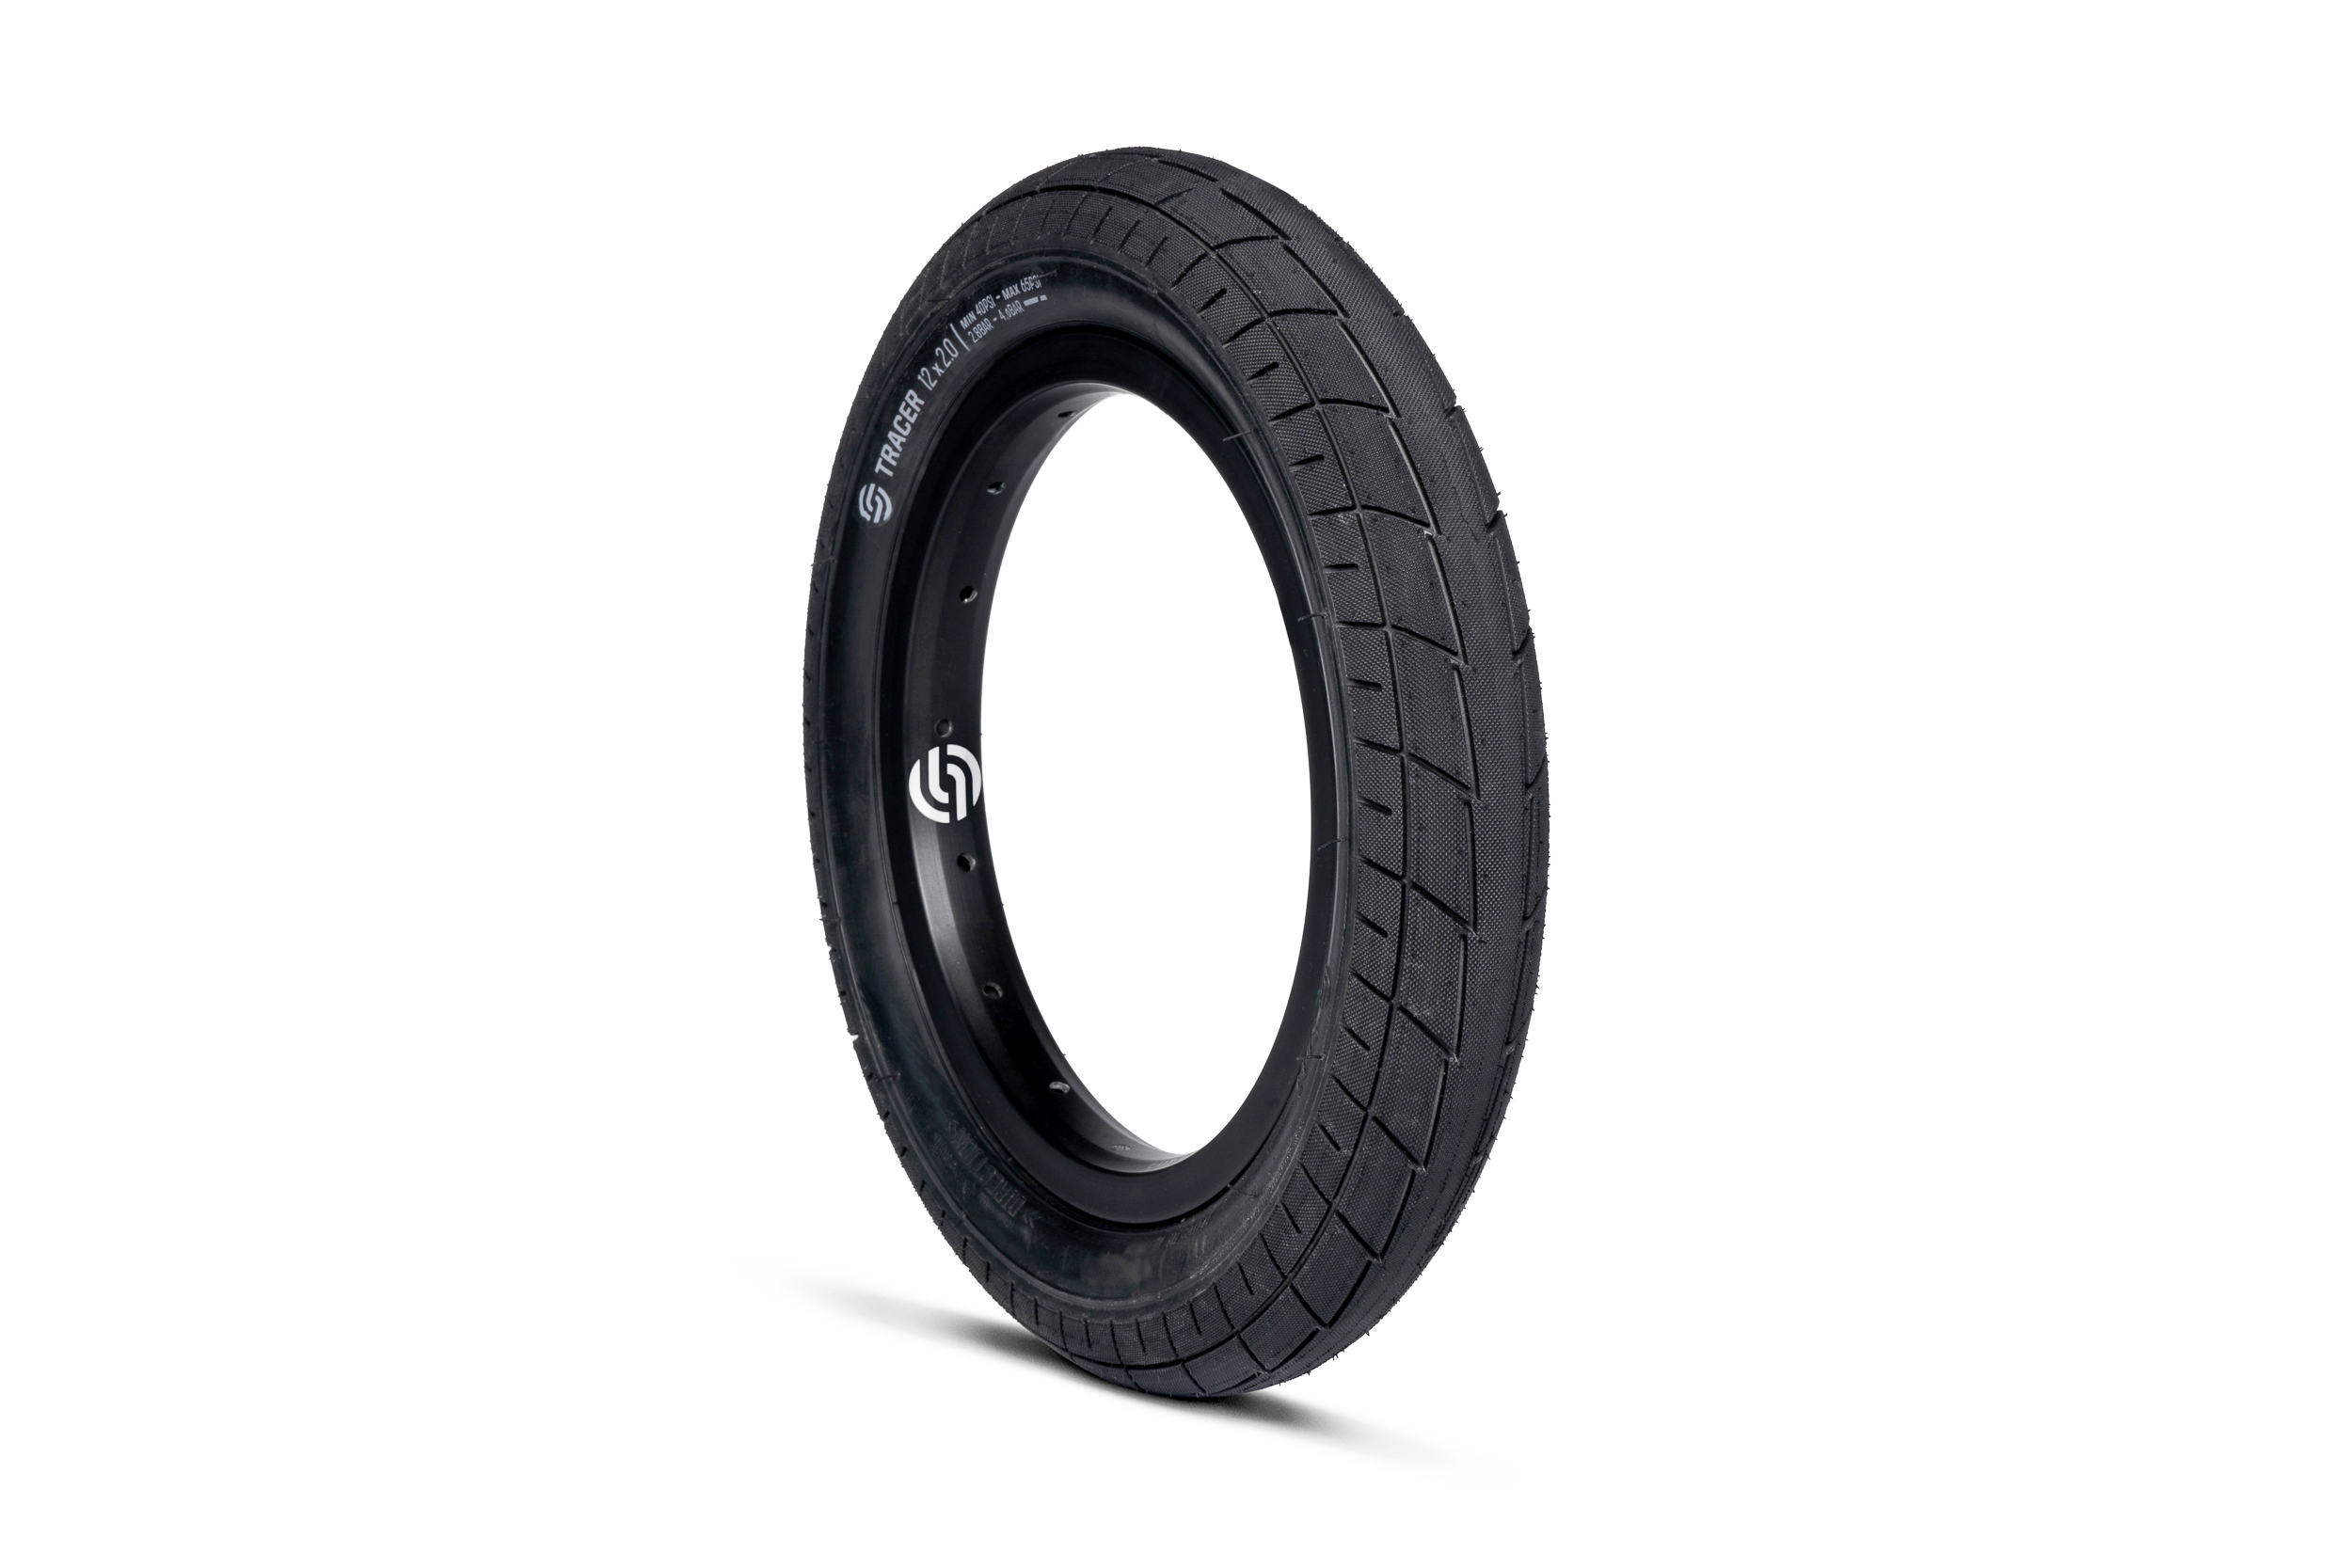 Salt Tracer Tire - 12 x 2.35 Black (1)